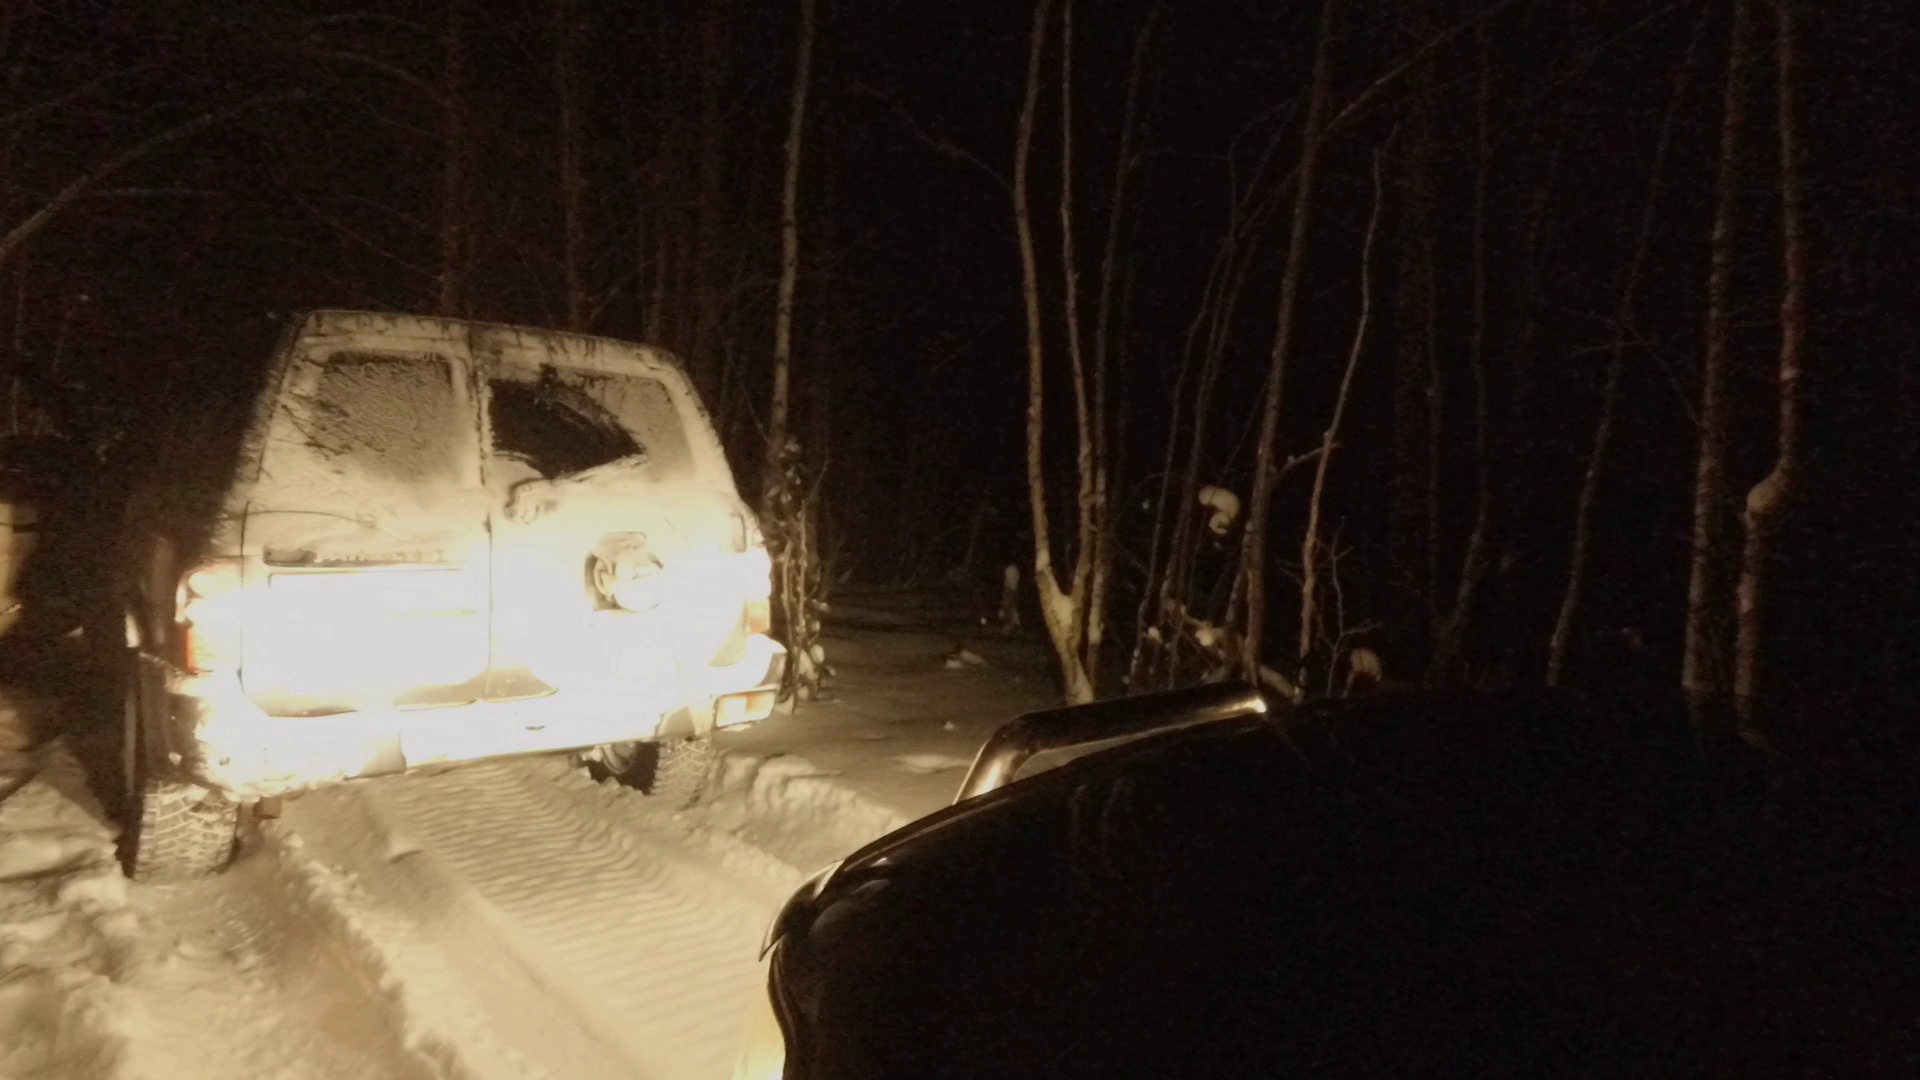 Adventures of Toyota Land Cruiser 80 and Nissan Patrol Y61 in a snowy forest. 4x4. PerekatiKolsky - My, Toyota, Nissan, 4x4, Off road, Murmansk, Kola Peninsula, Auto, Forest, Winter, 2021, Video, Longpost